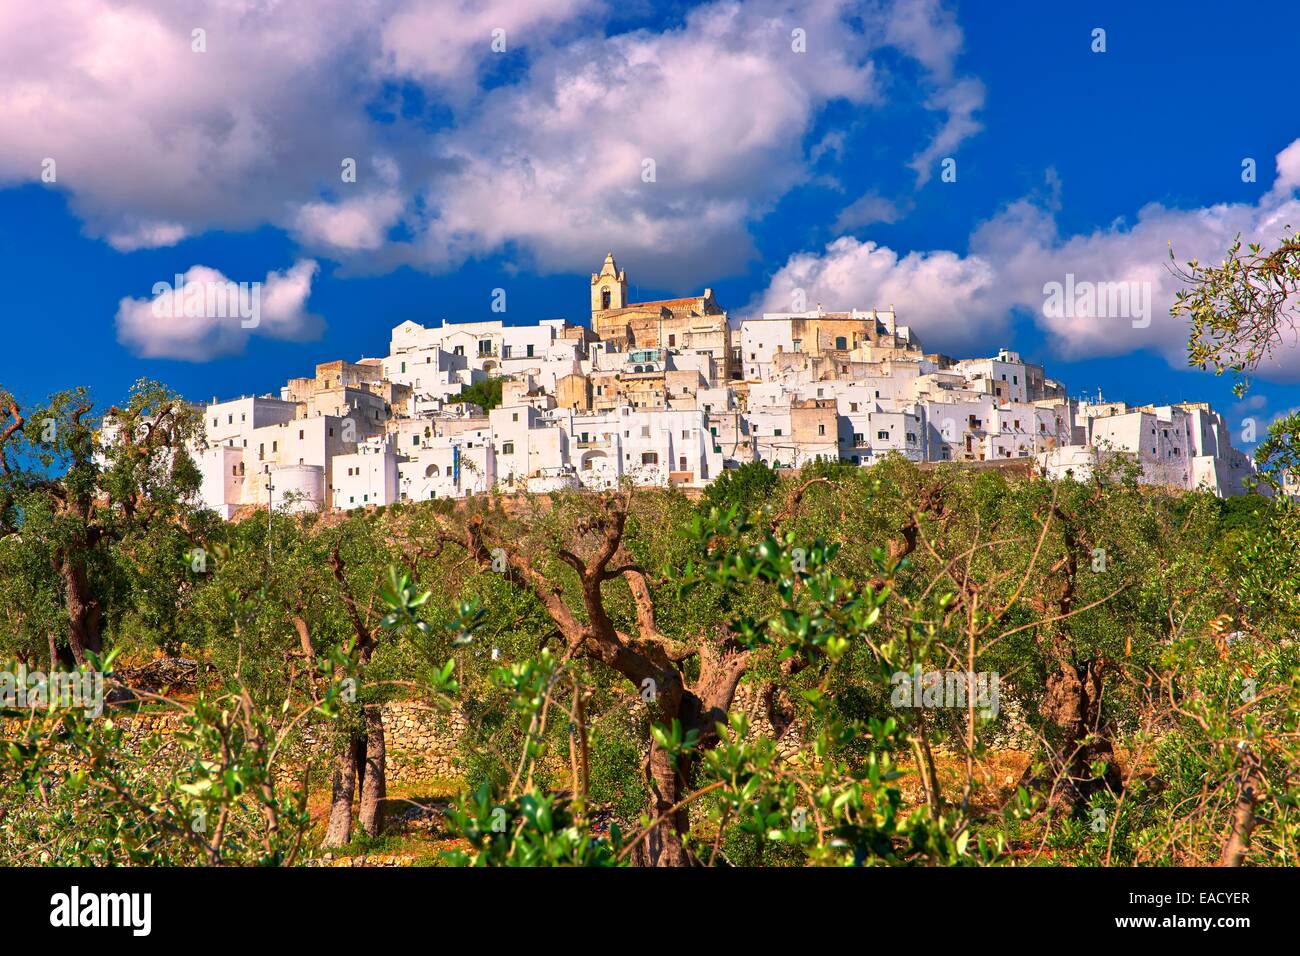 La colina de la ciudad fortificada medieval de Ostuni, también "La Città Bianca", "La Ciudad Blanca", Ostuni, Puglia, Italia Foto de stock